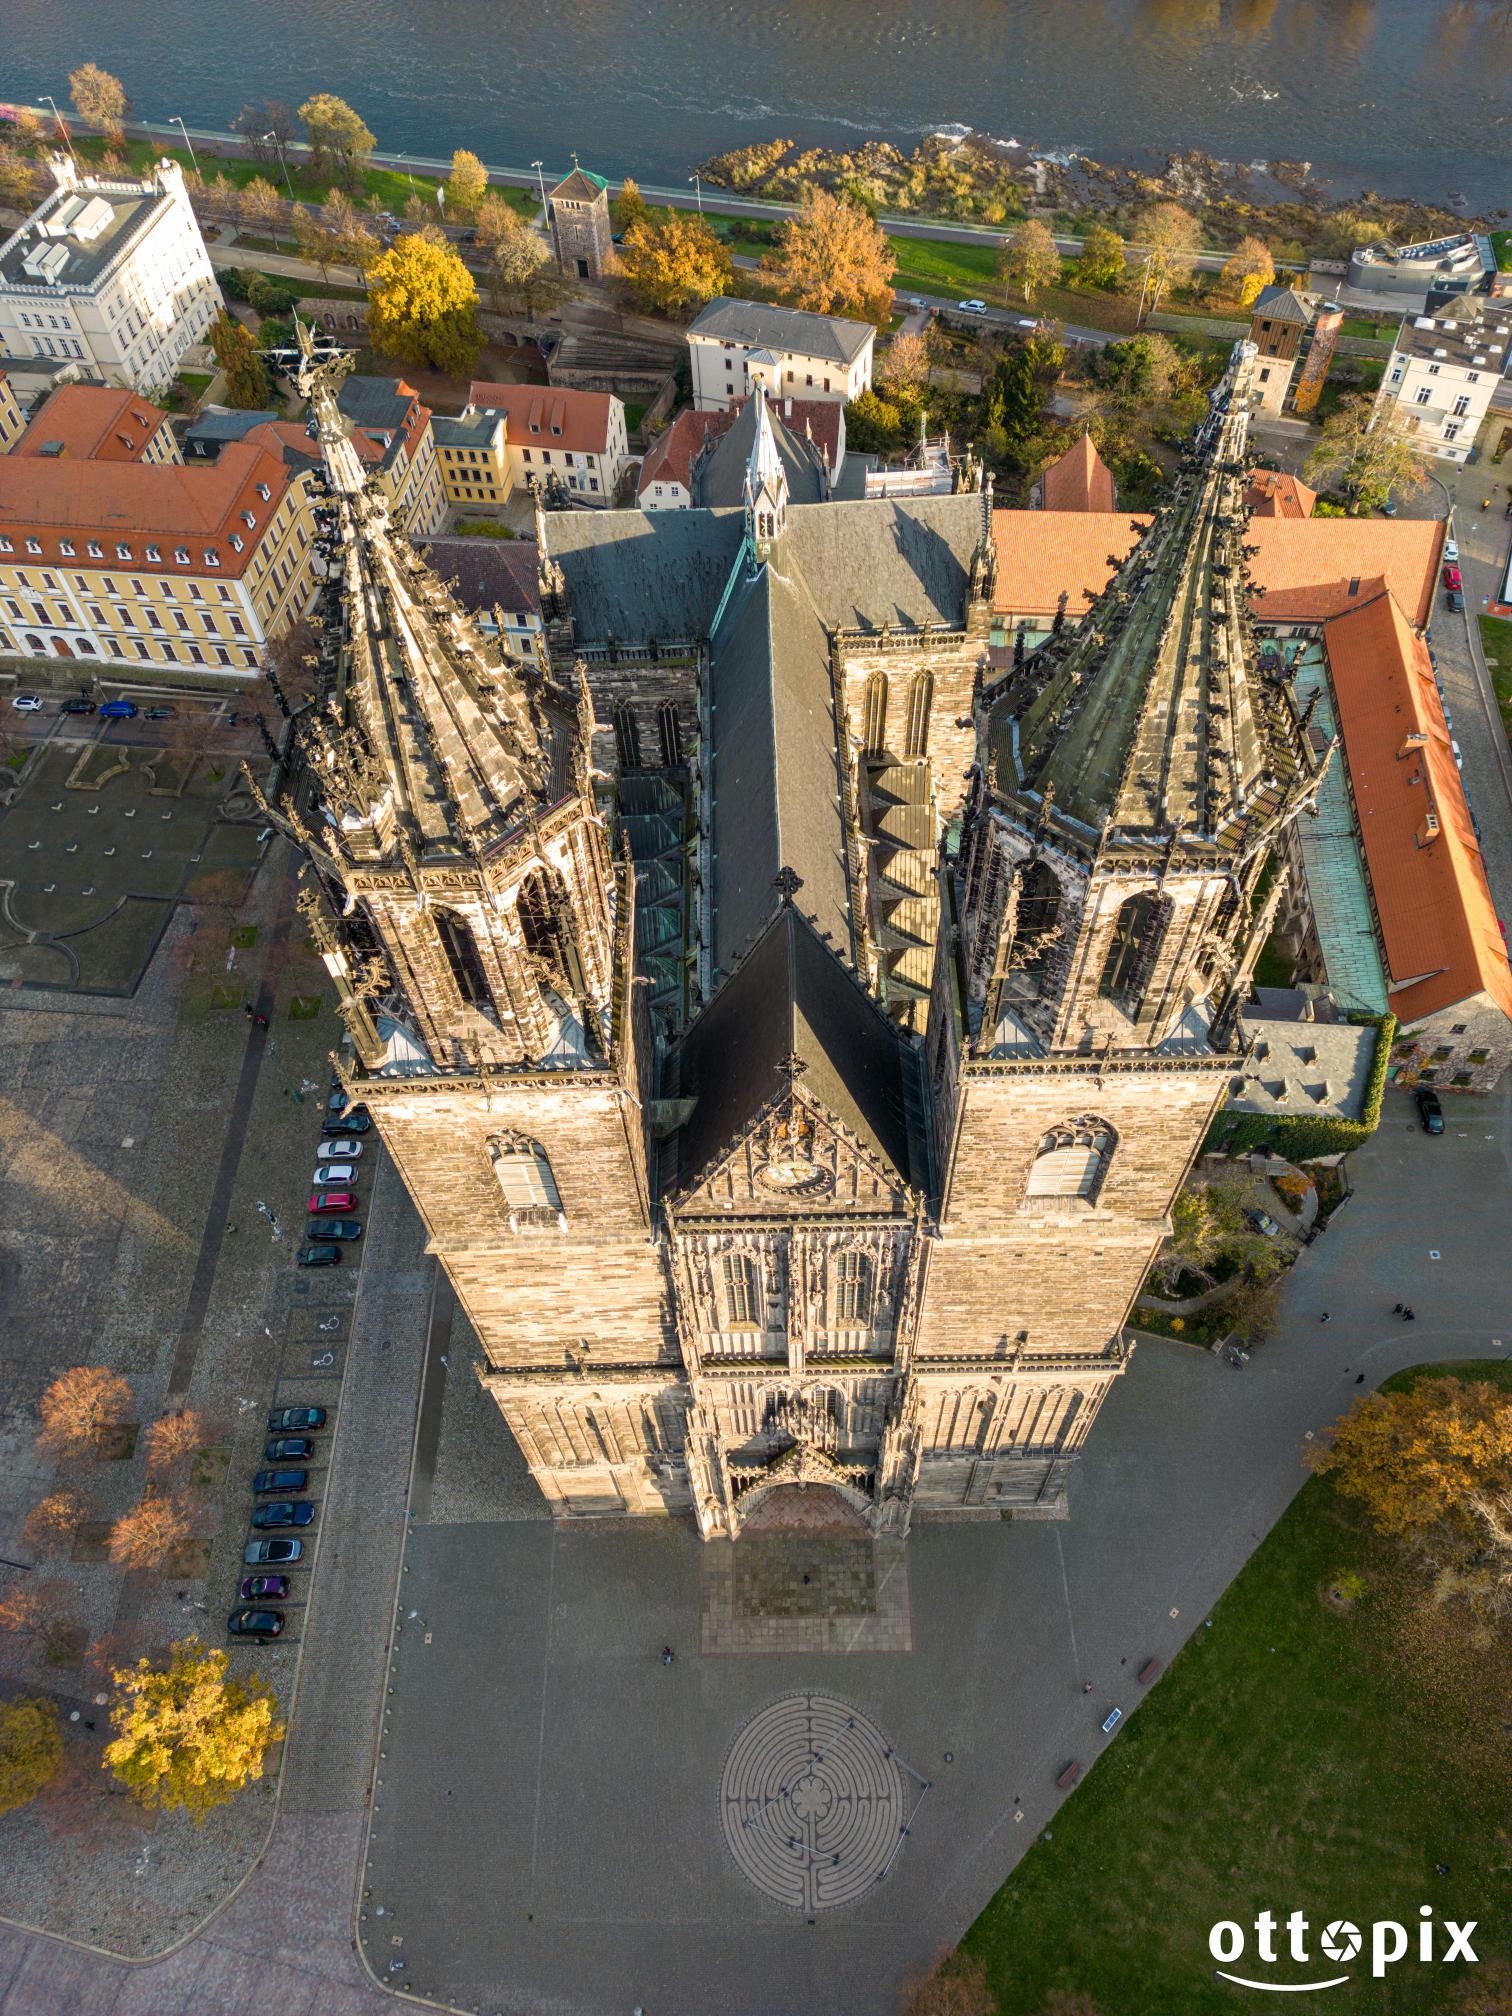 Dom zu Magdeburg über dem Westportal